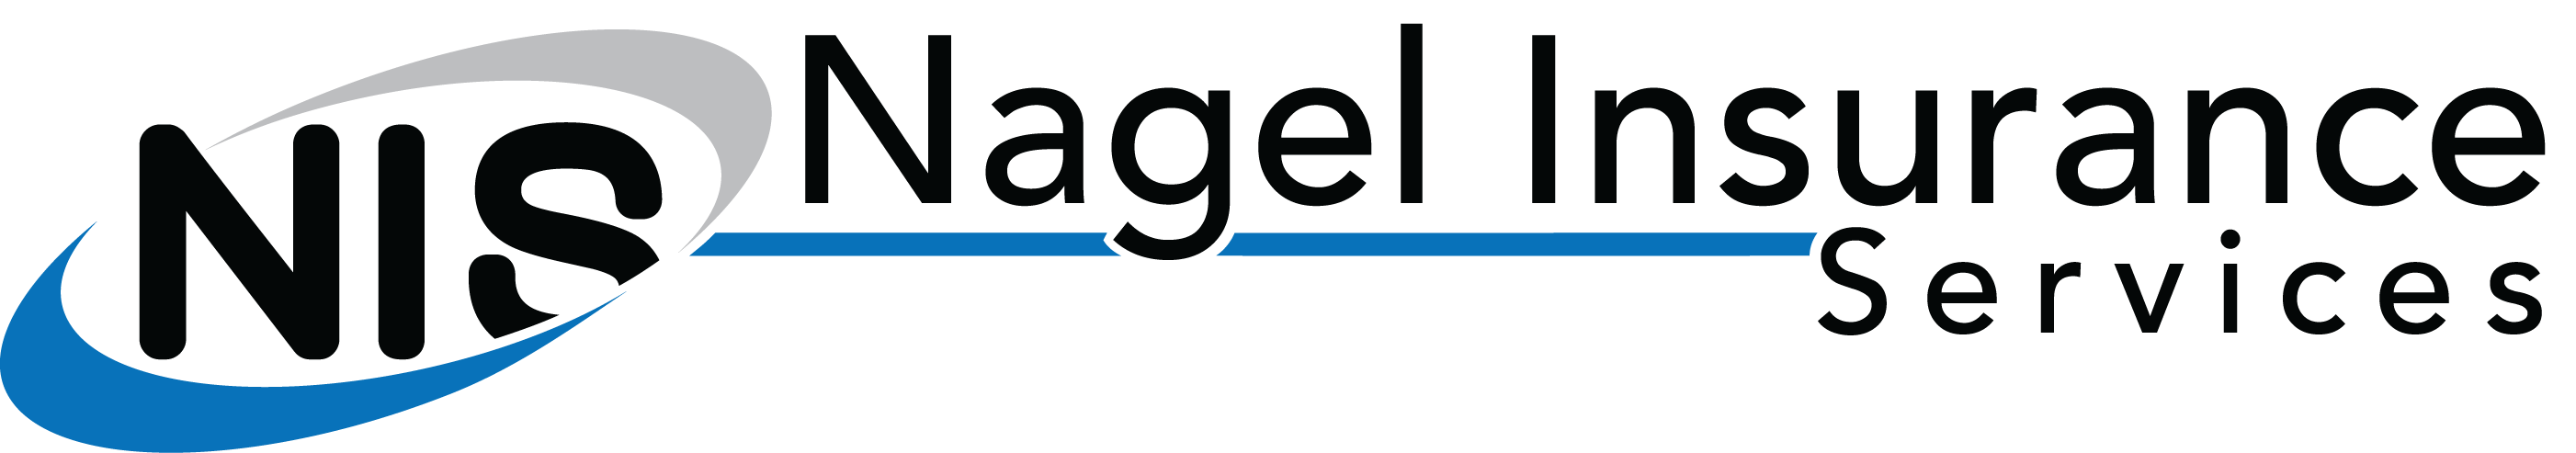 NIS - Nagel Insurance Services - Saskatchewan  - Logo Design